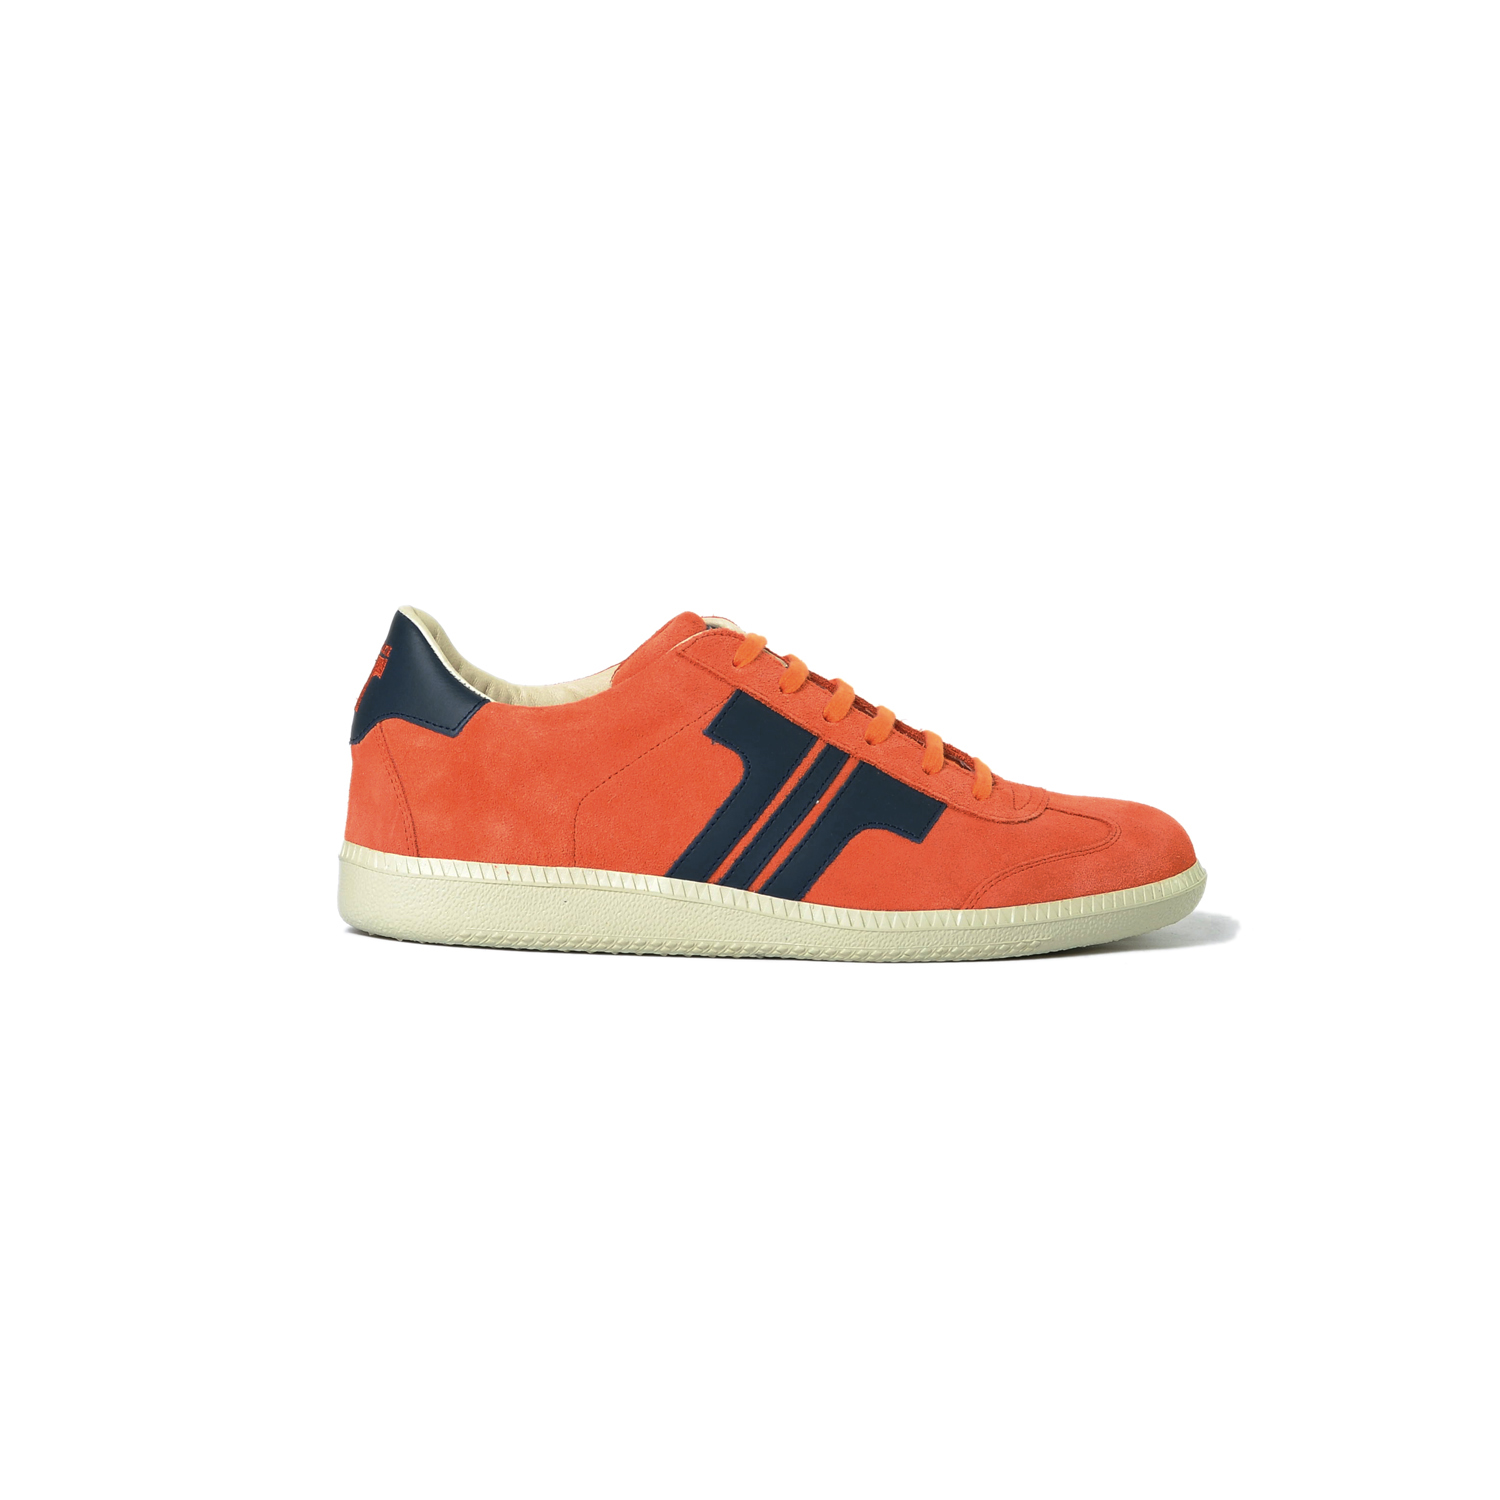 Tisza shoes - Comfort - Orange-blue